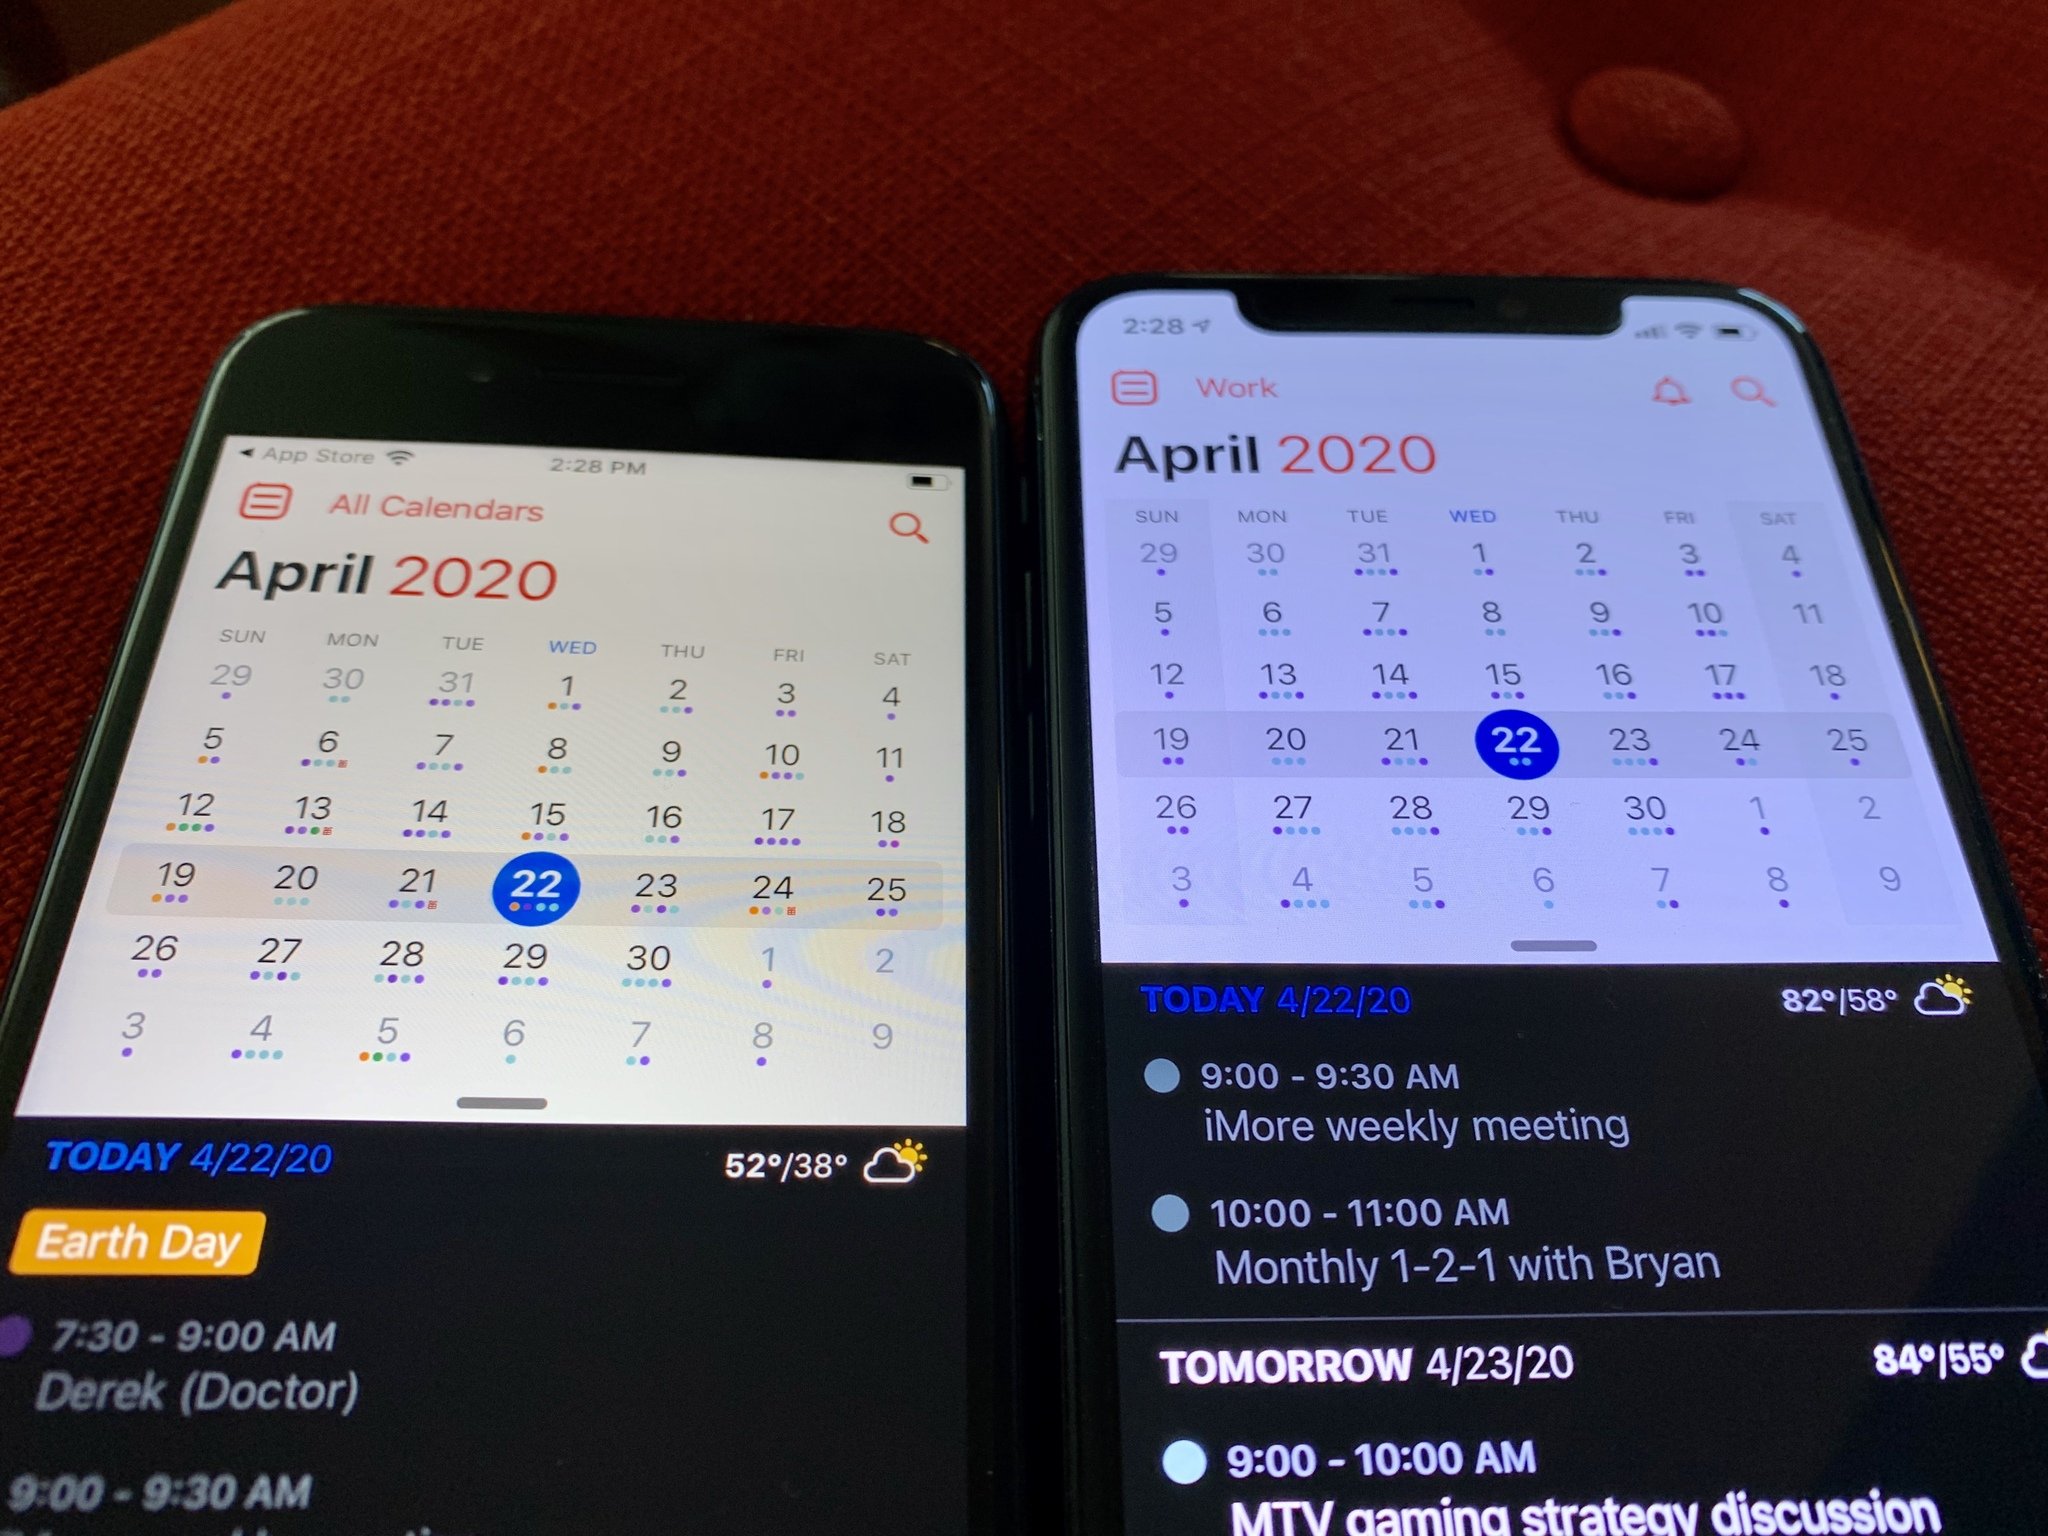 iPhone SE 2020 iPhone 11 Pro Screen Comparison